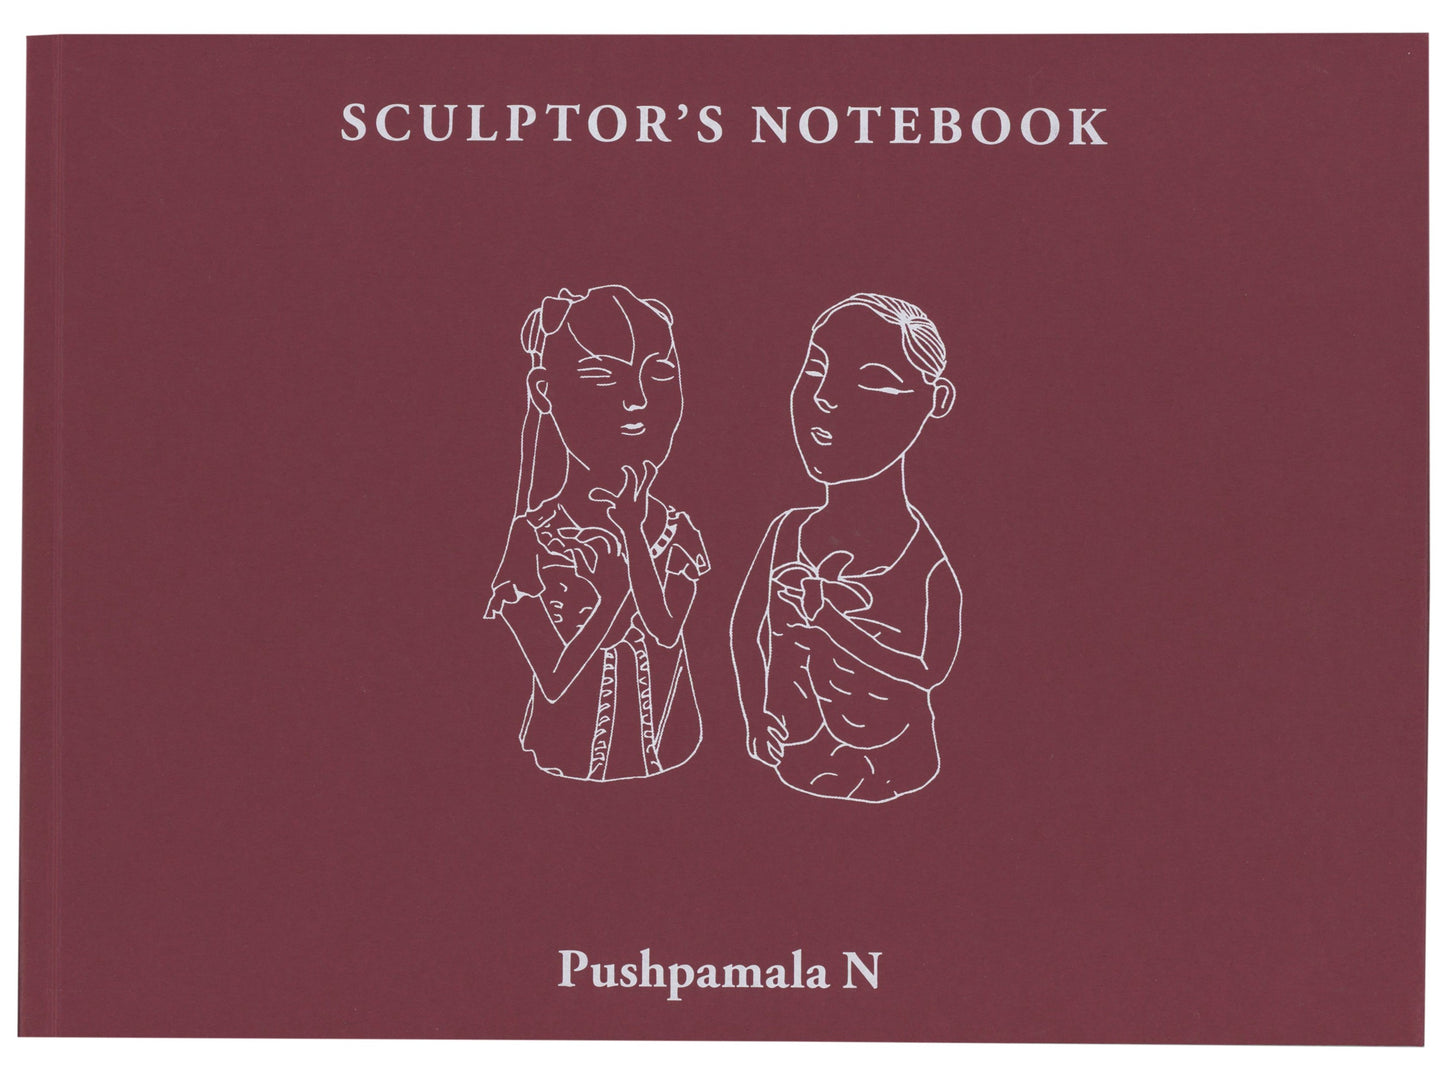 Sculptor's Notebook by Pushpamala N